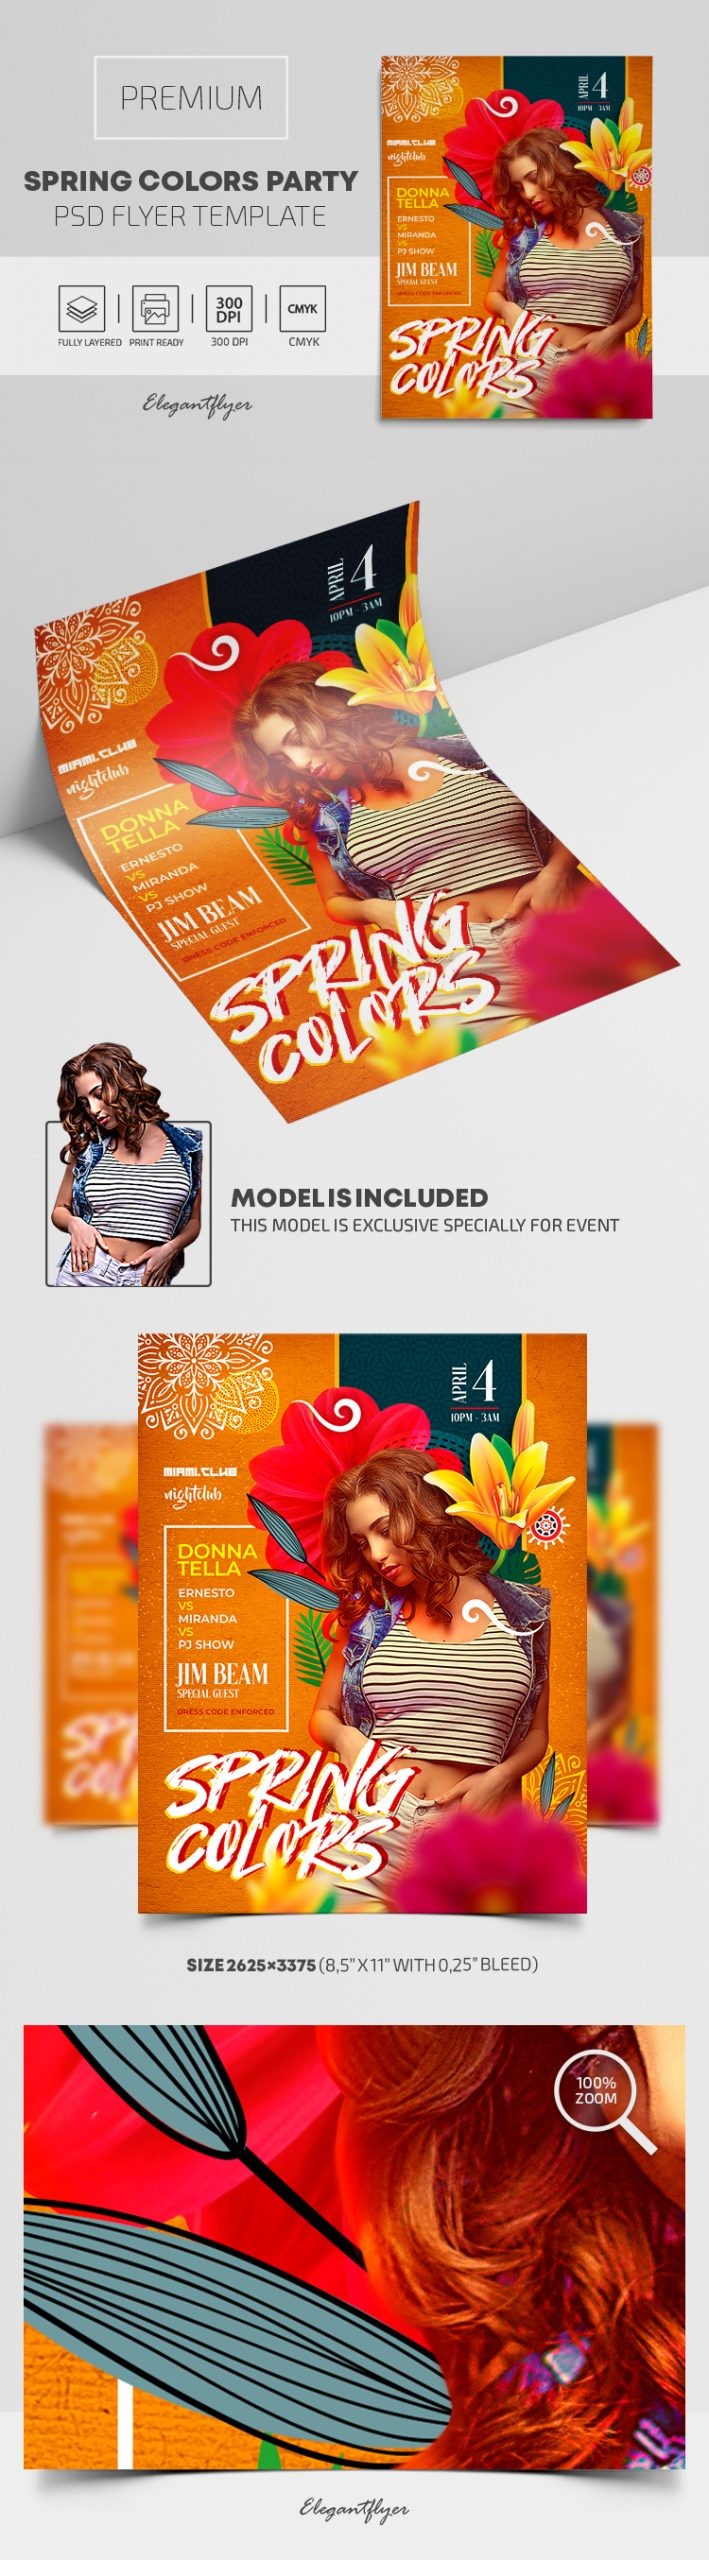 Spring Colors Party Flyer by ElegantFlyer